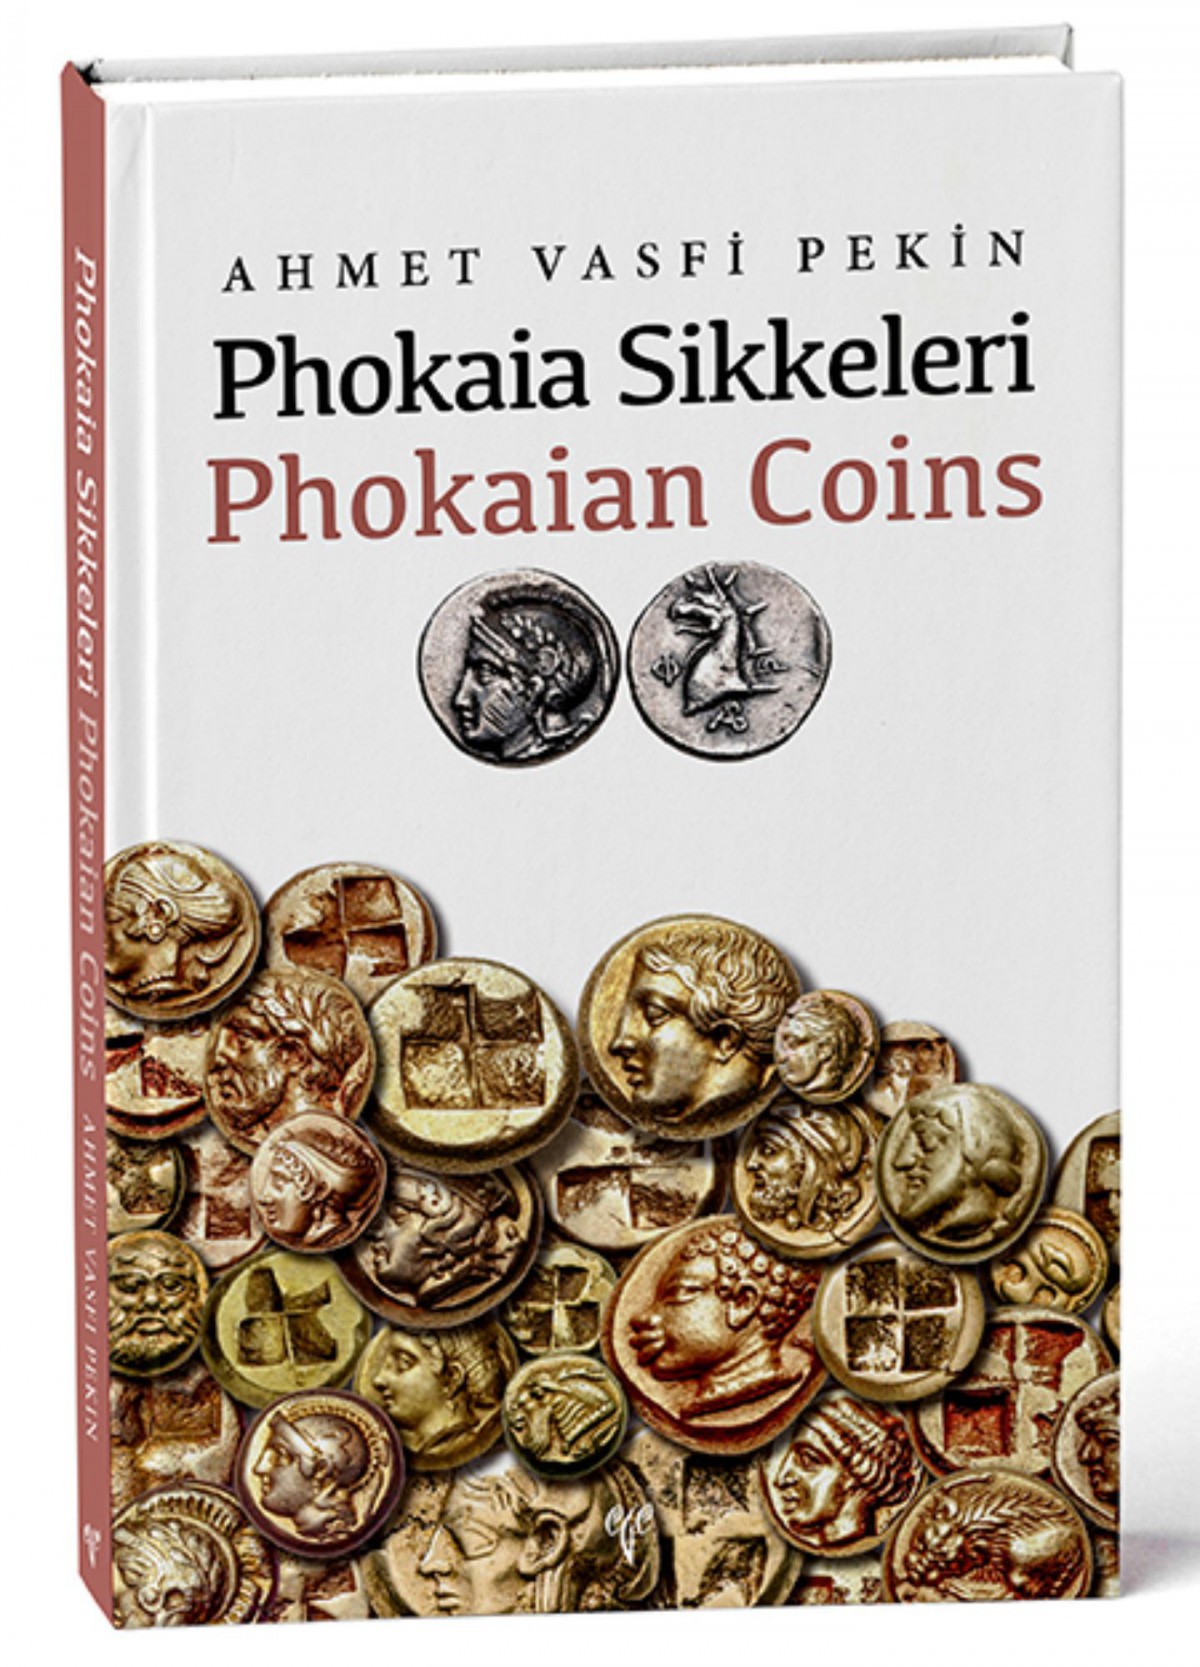 Phokaian Coins - Phokaia Sikkeleri